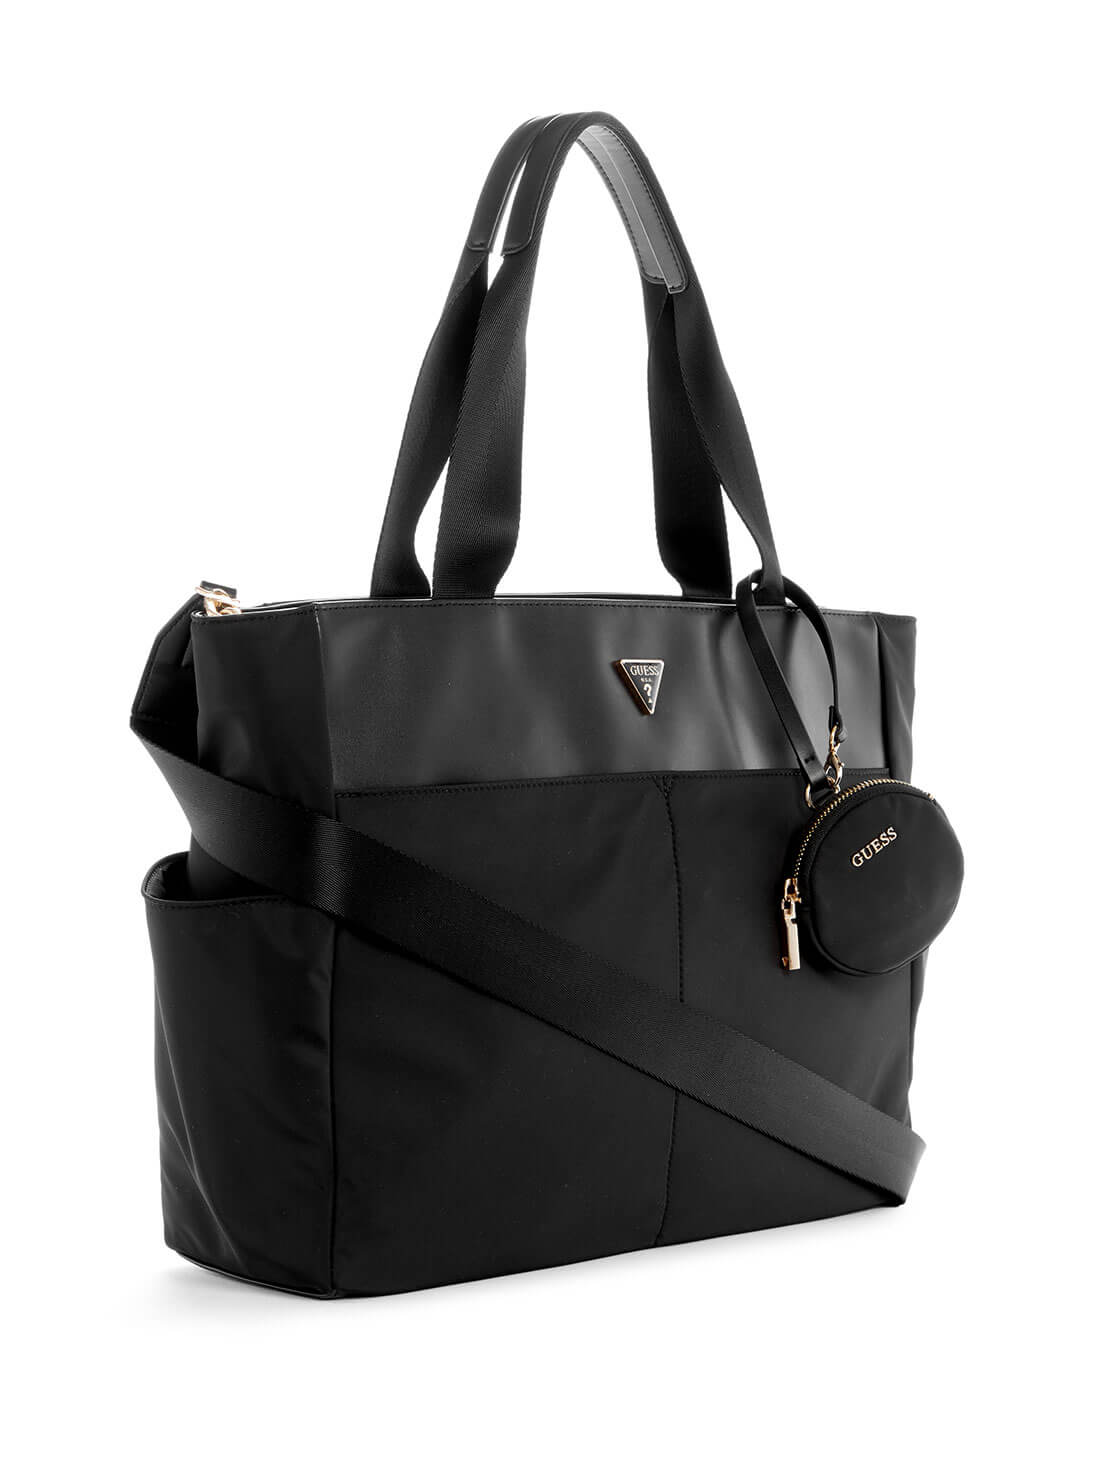 Eco Black Gemma Travel Tote Bag | GUESS Women's Handbags | side view